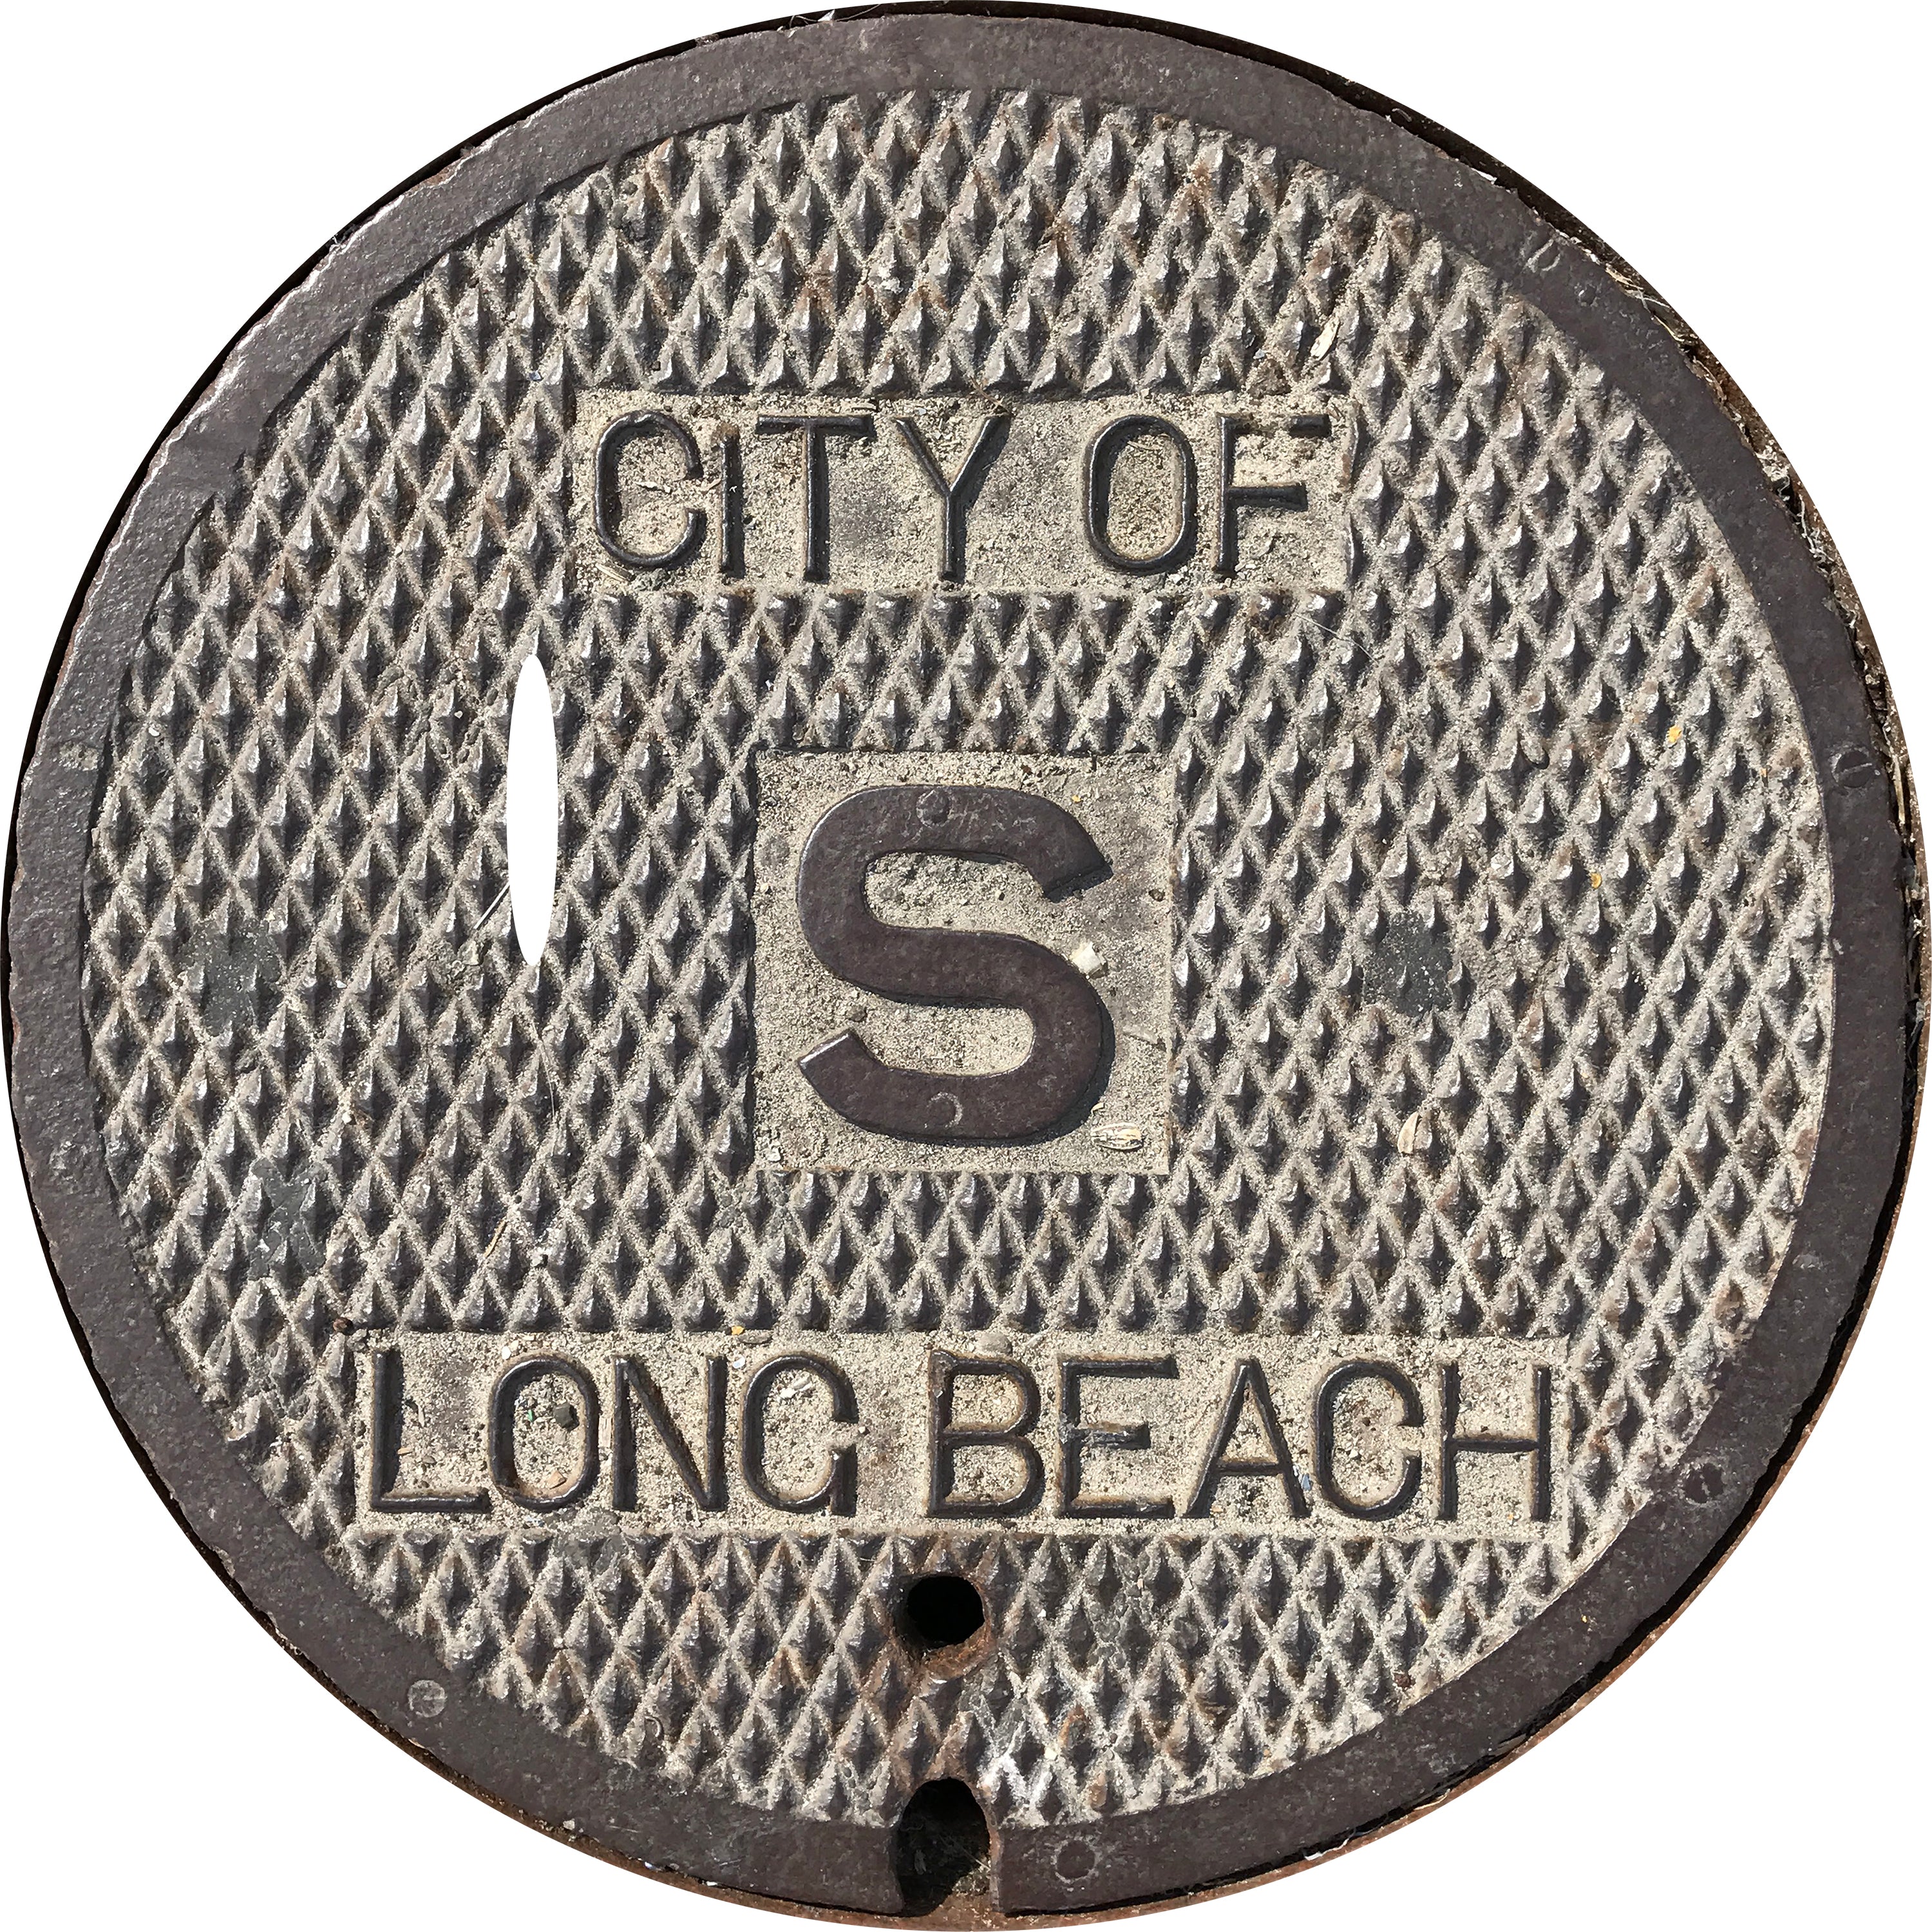 CALIFORNIA SERIES - Sewer Cover Doormat, Trivet, Coaster - Long Beach, CA